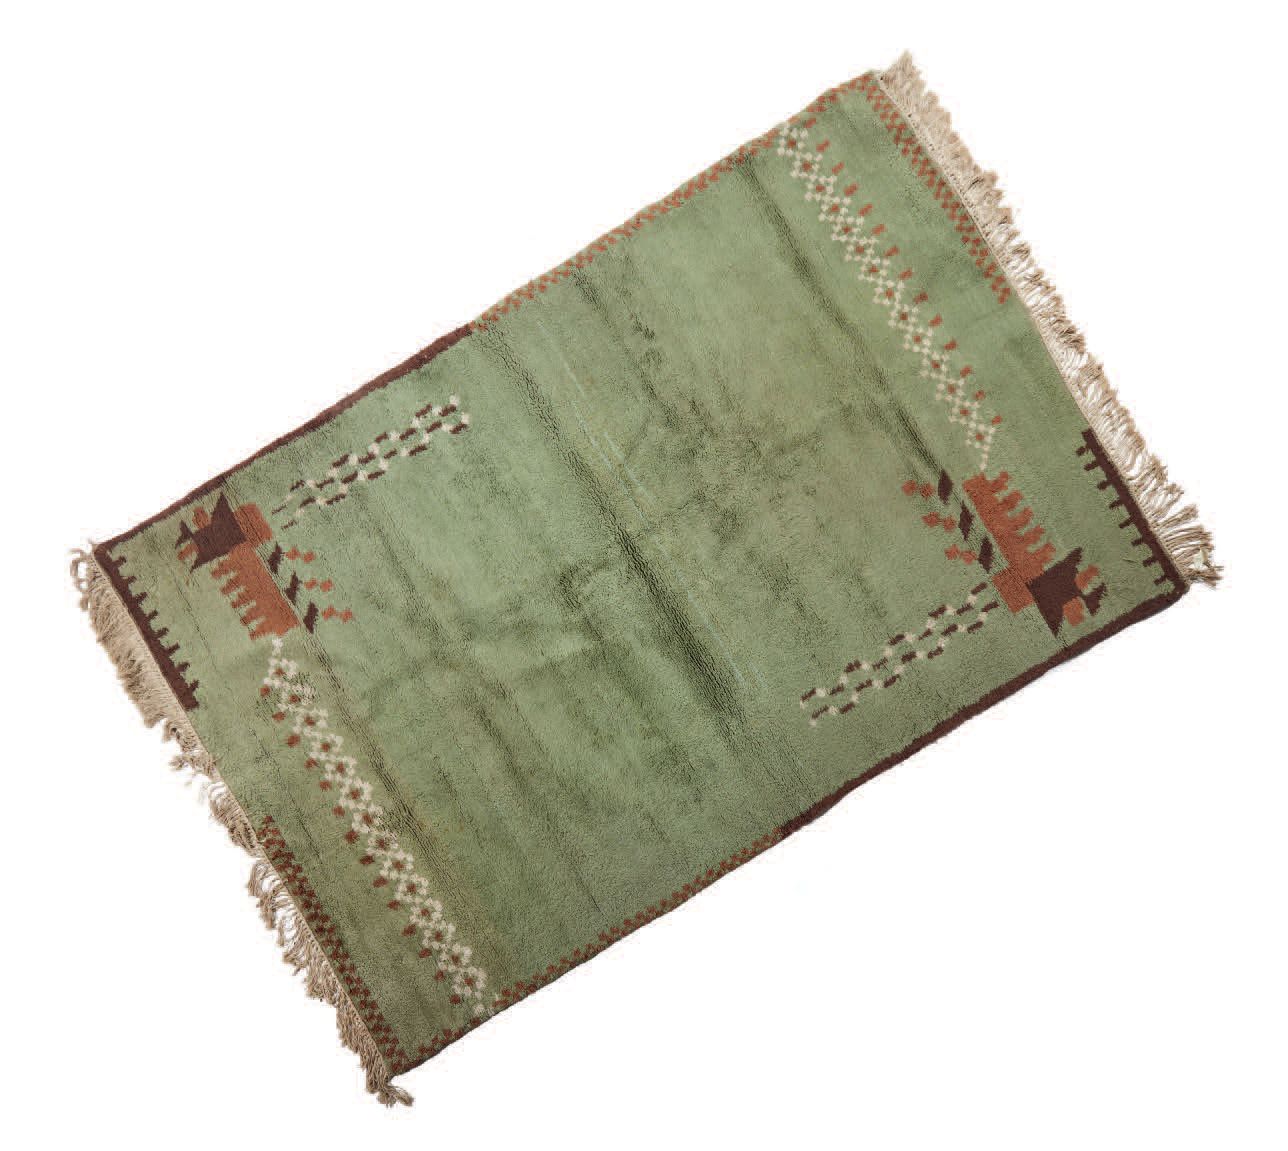 Travail des années 1930 
绿底棕色几何图案的羊毛地毯
162 x 247 cm